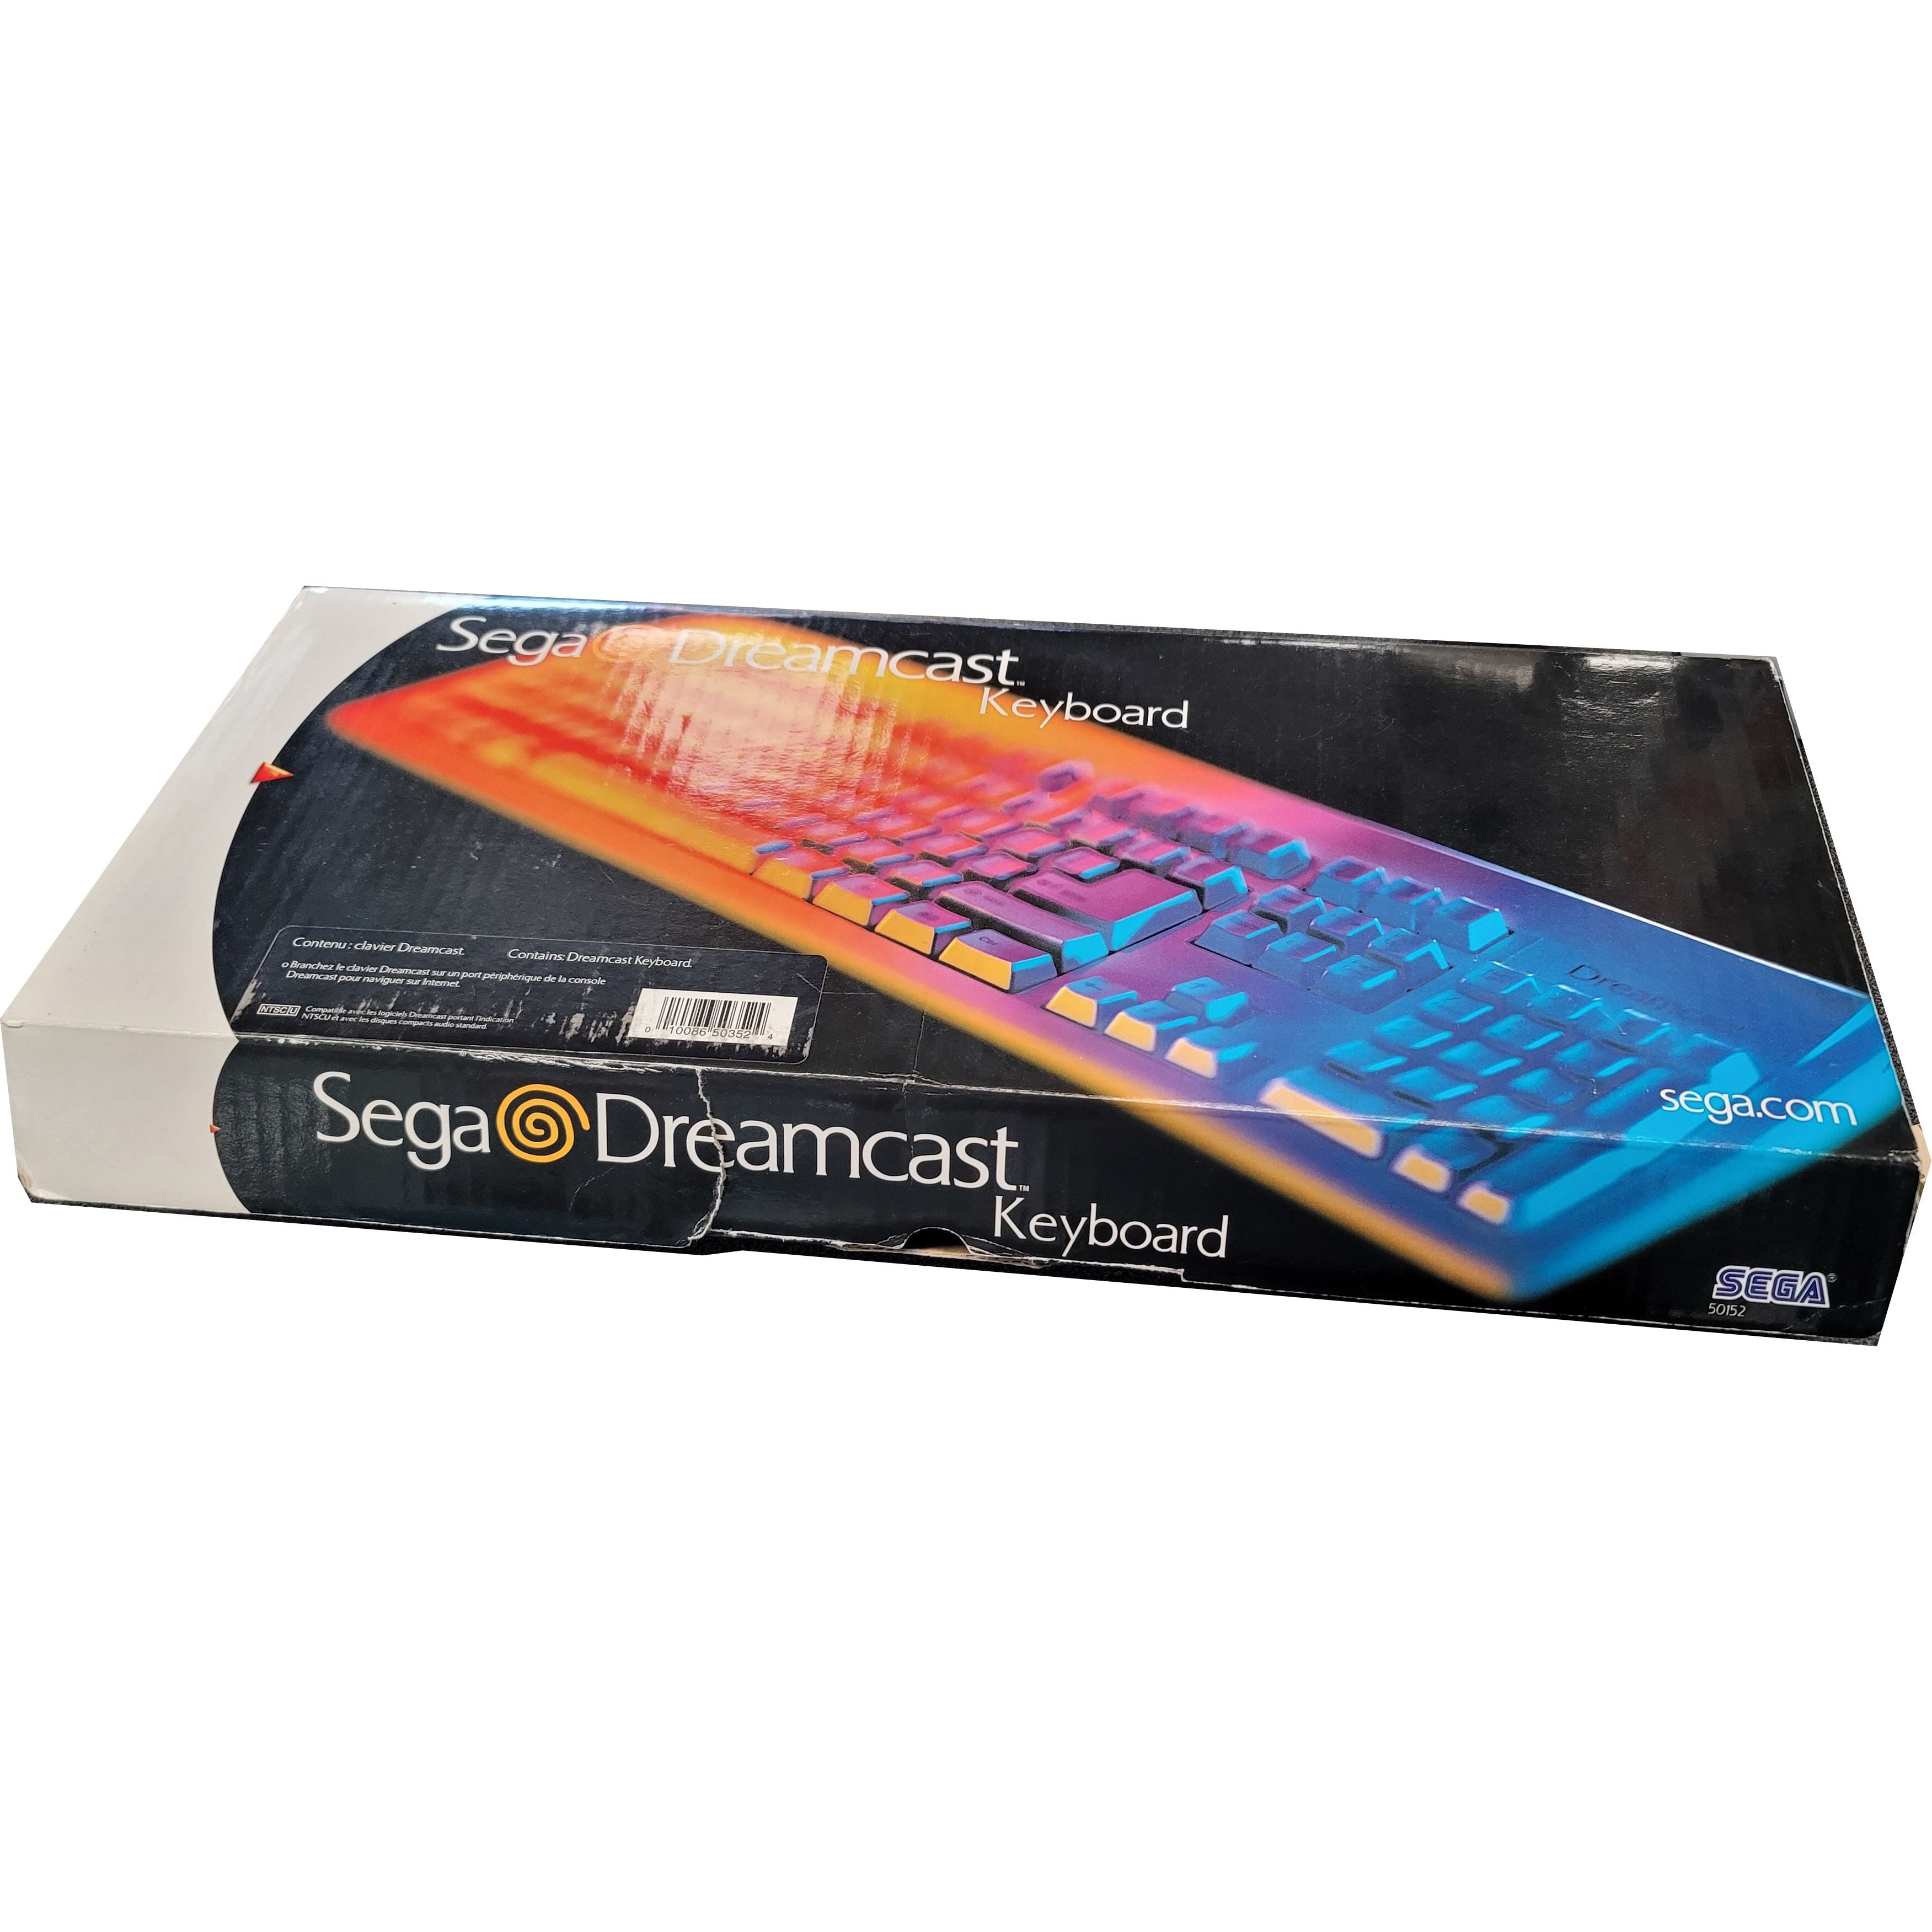 Sega Dreamcast Keyboard (Complete in Box)